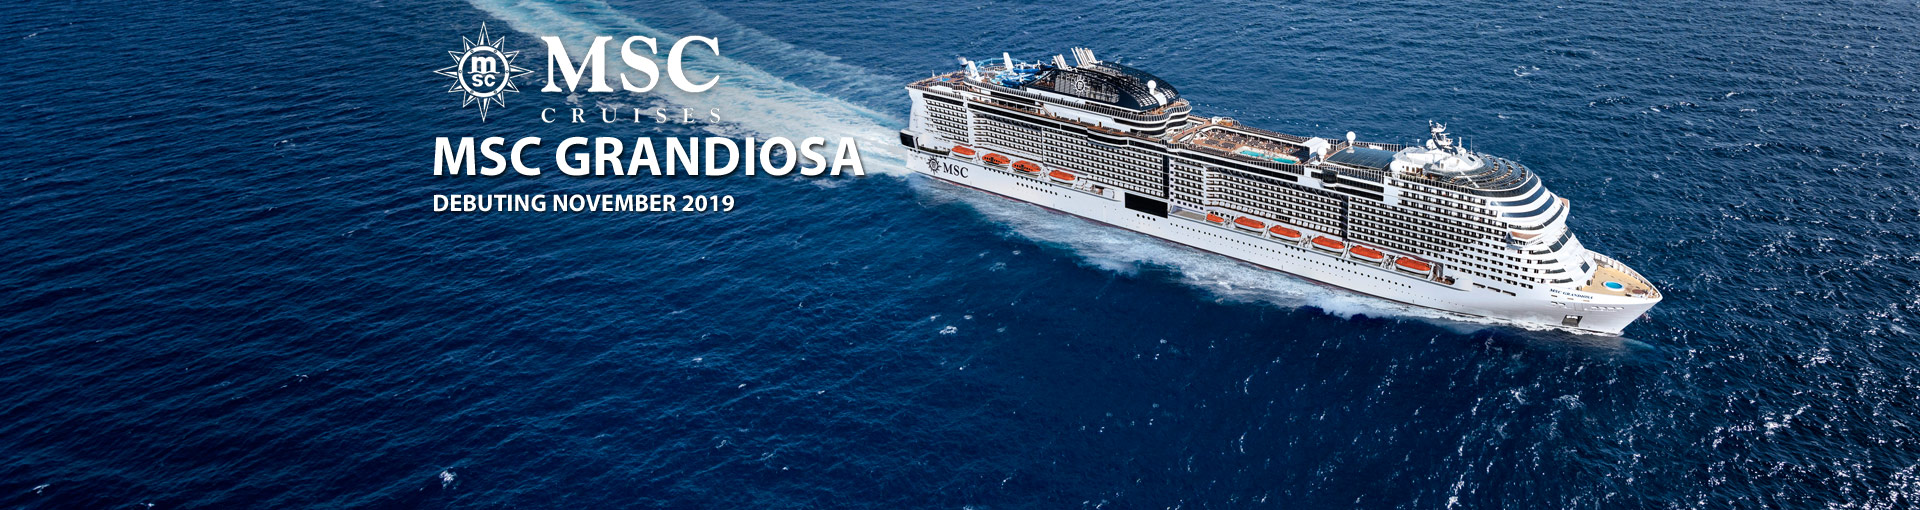 msc-cruises-grandiosa-cruise-ship-banner